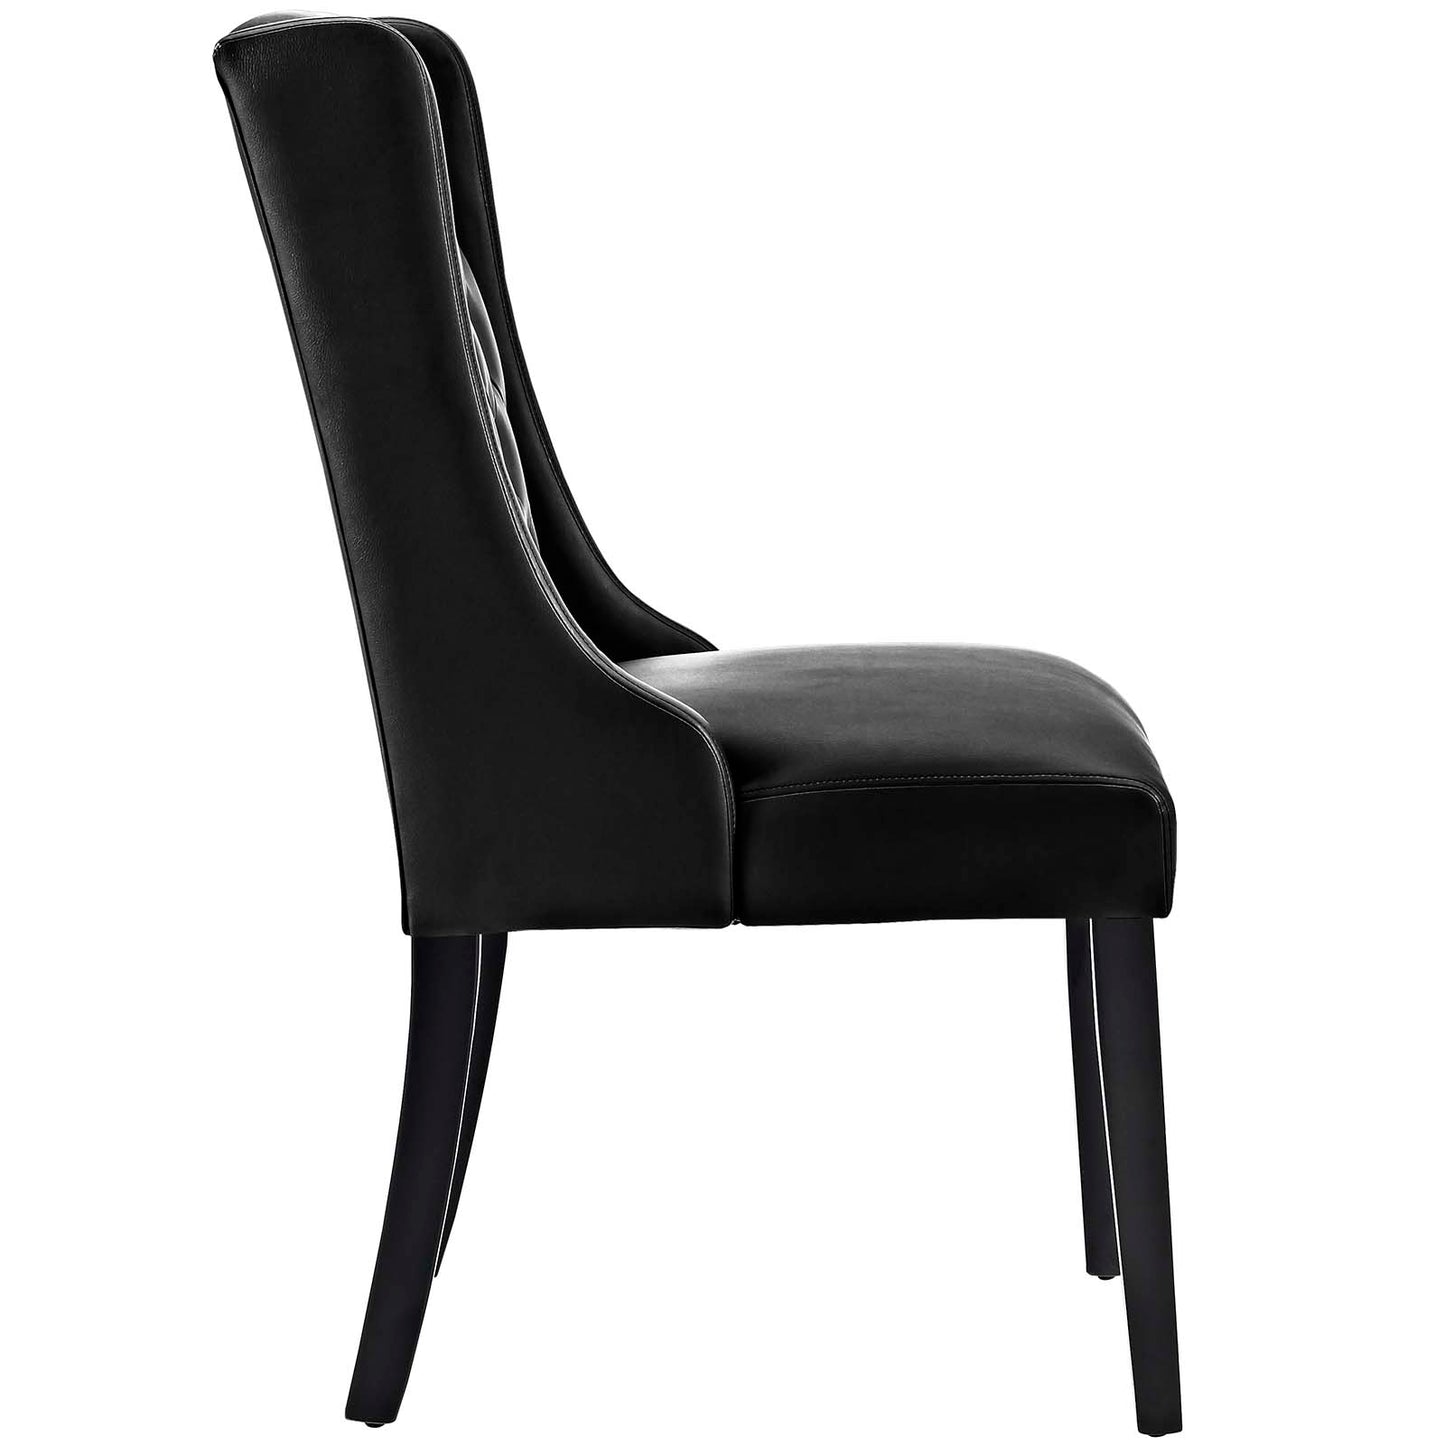 Baronet Vinyl Dining Chair Black EEI-3923-BLK